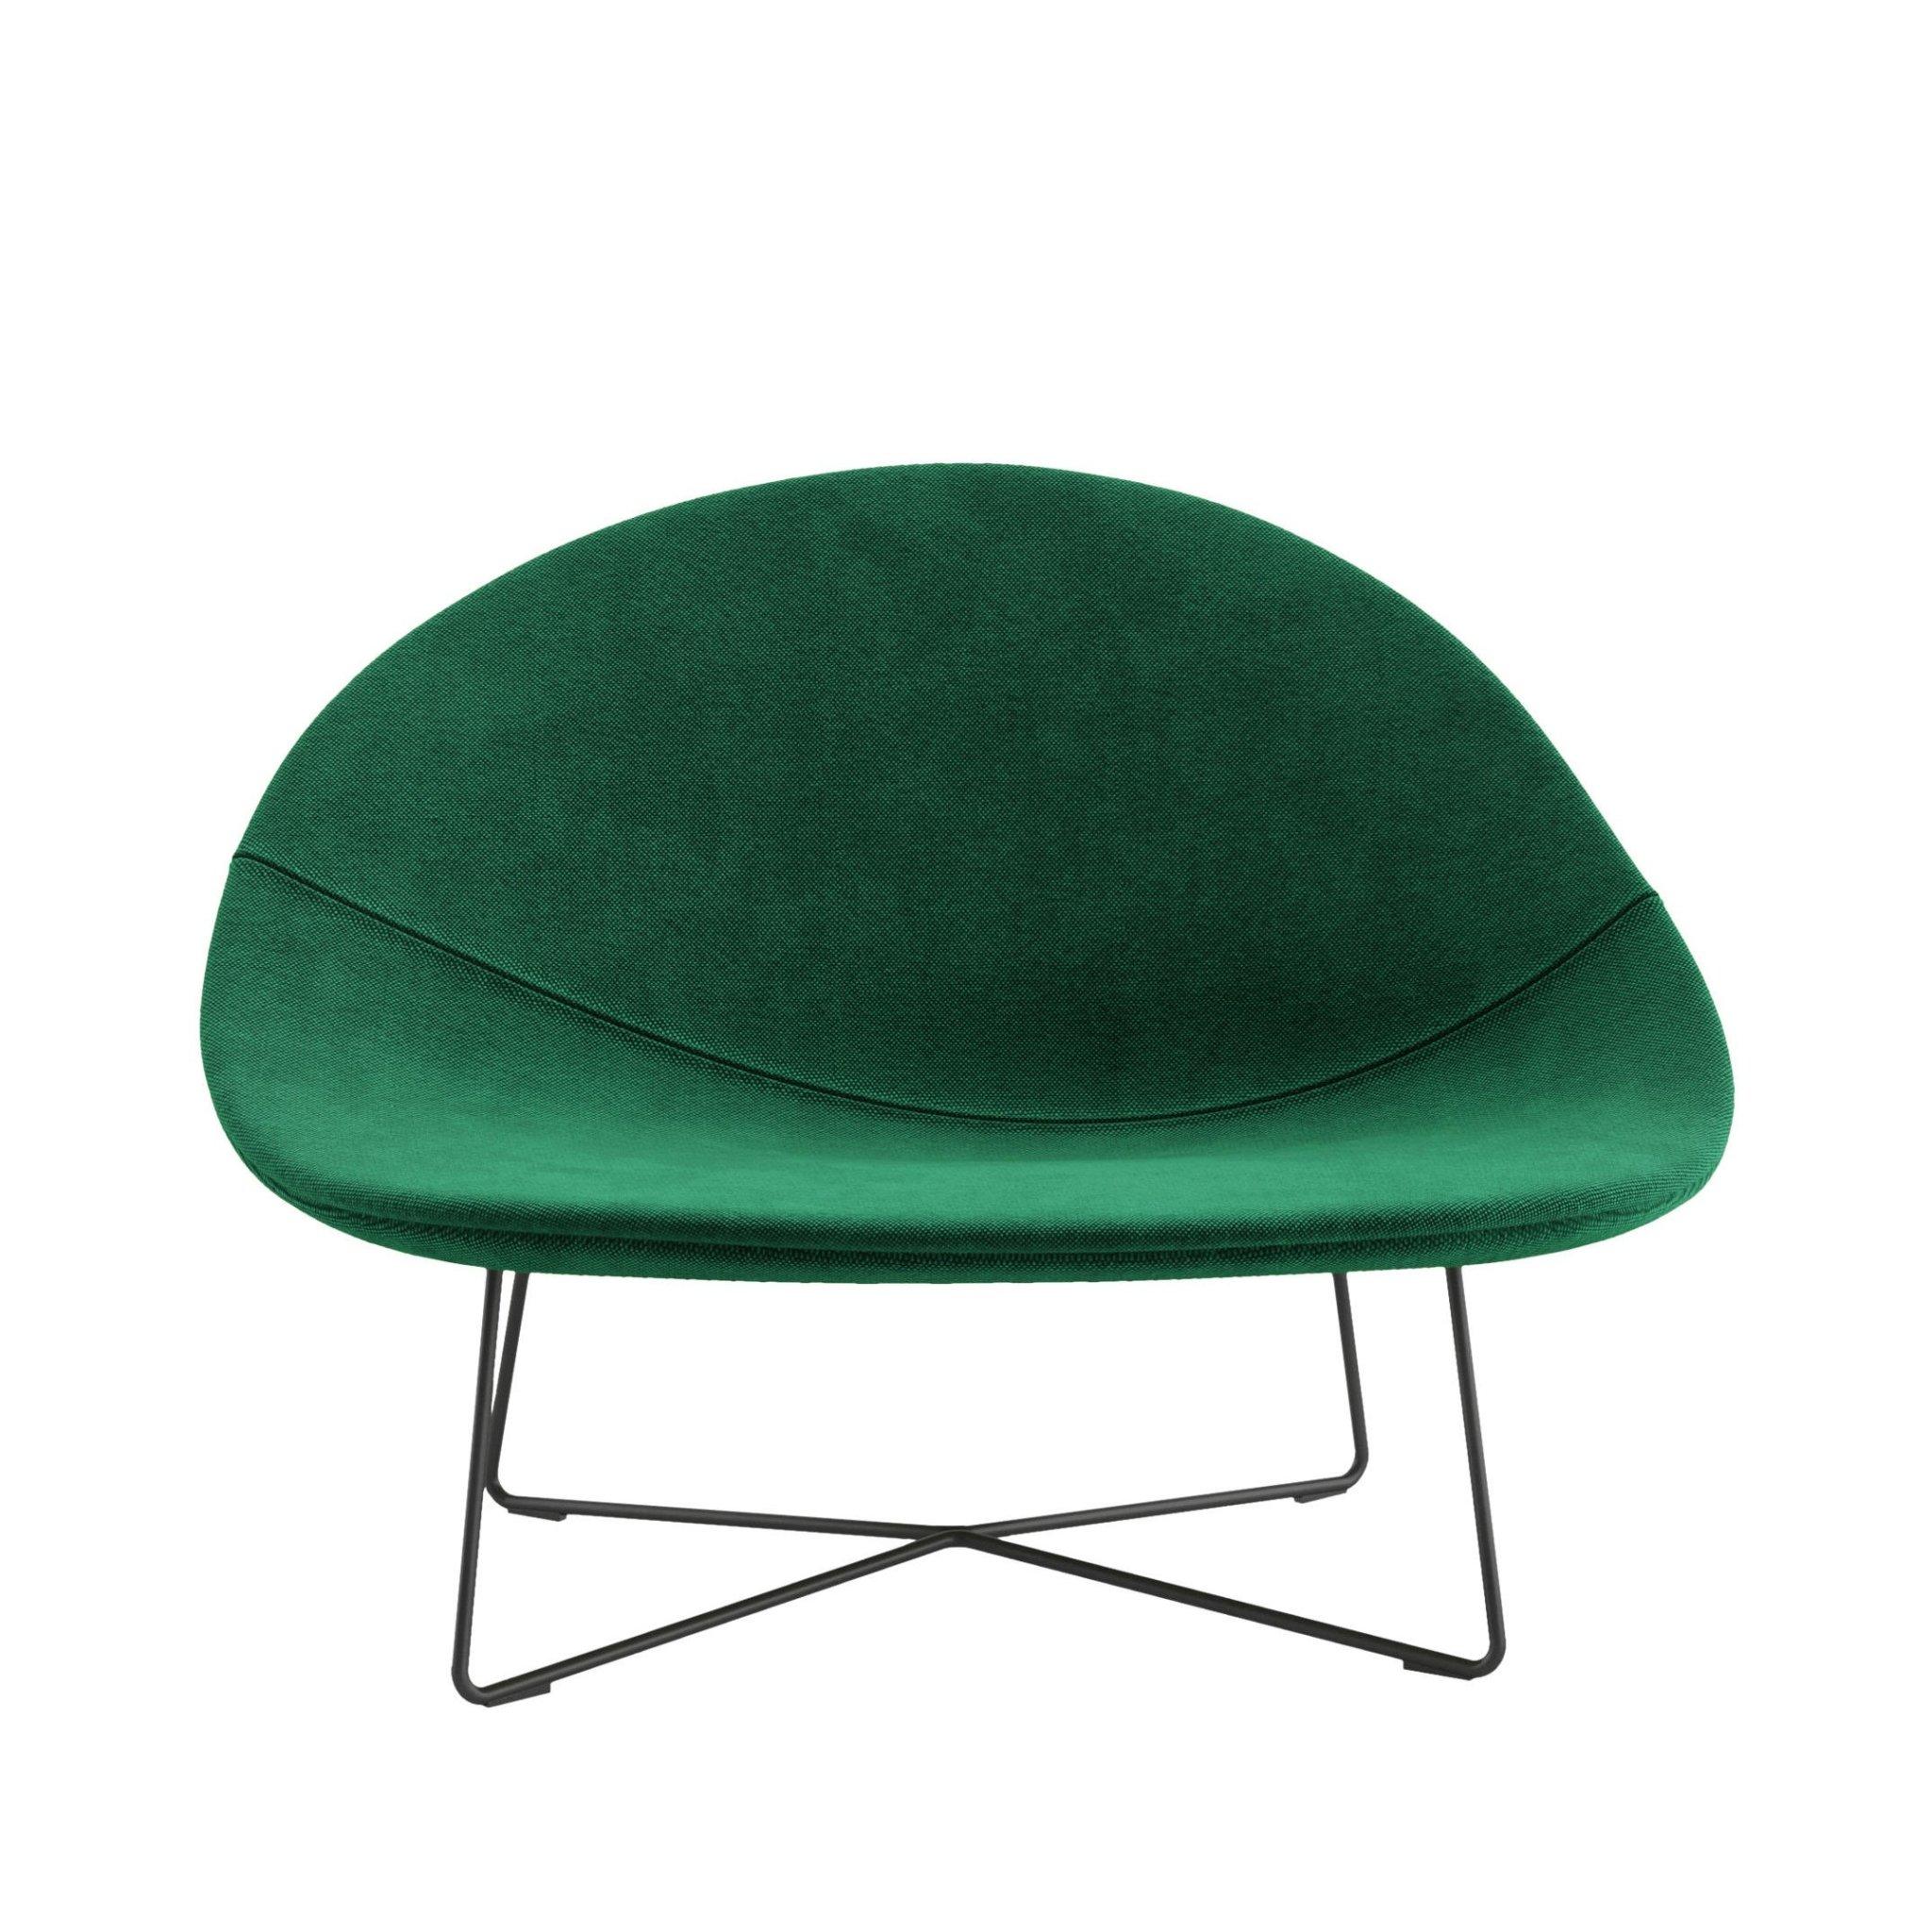 Italian Customizable Tacchini Isola Lounge Chair Designed by Claesson Koivisto Rune For Sale